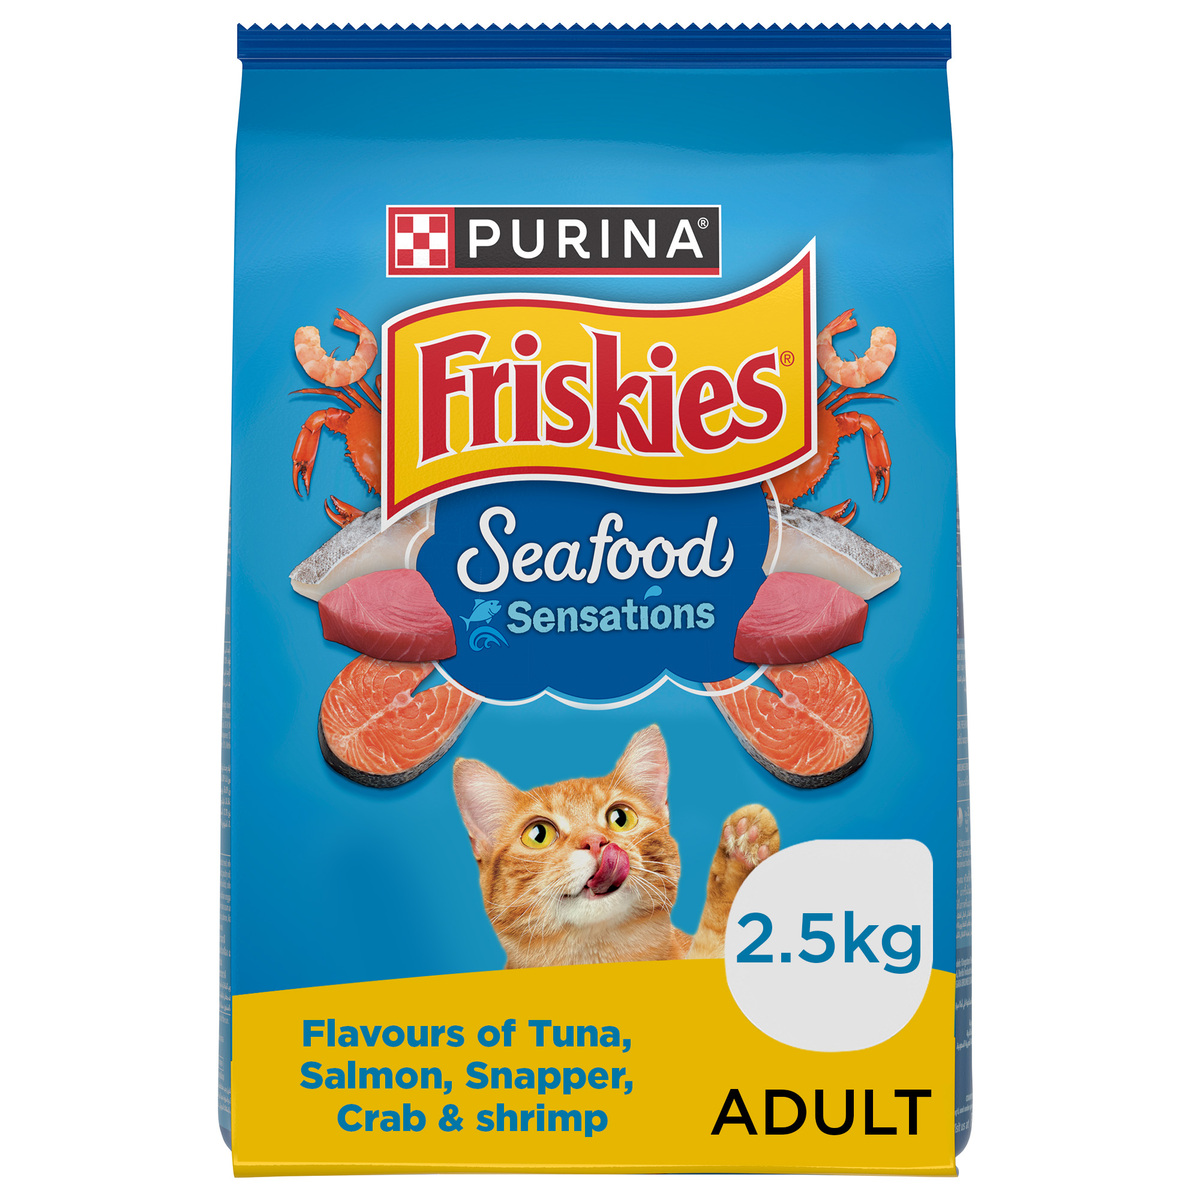 Purina Friskies Seafood Sensation Cat Food 2.5 kg